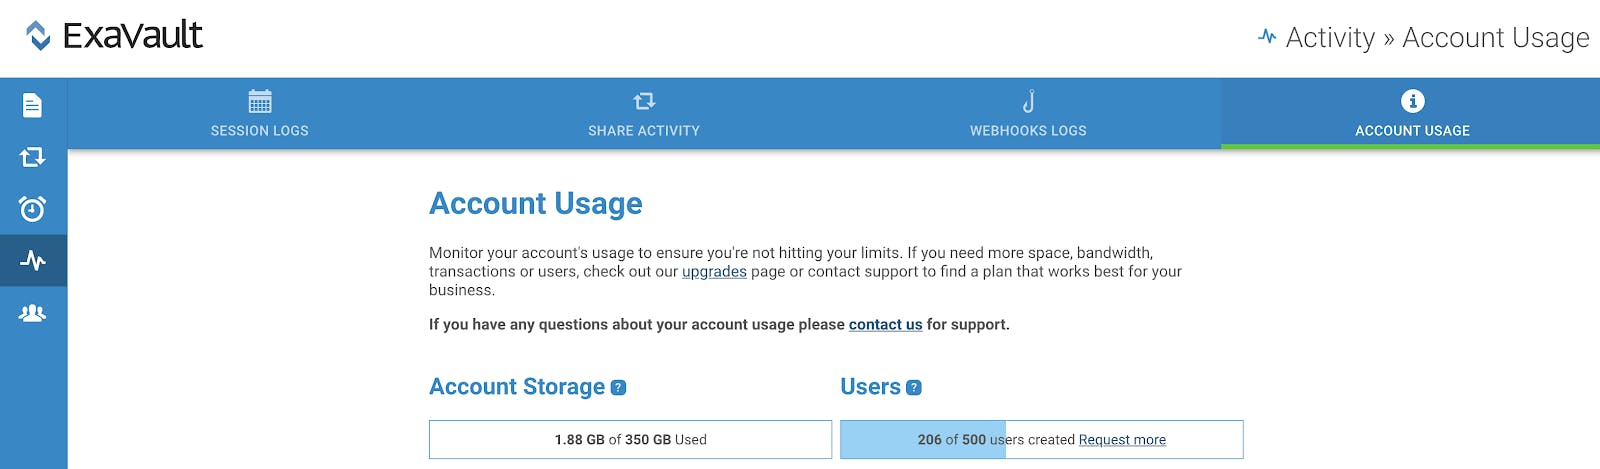 Account usage dashboard.